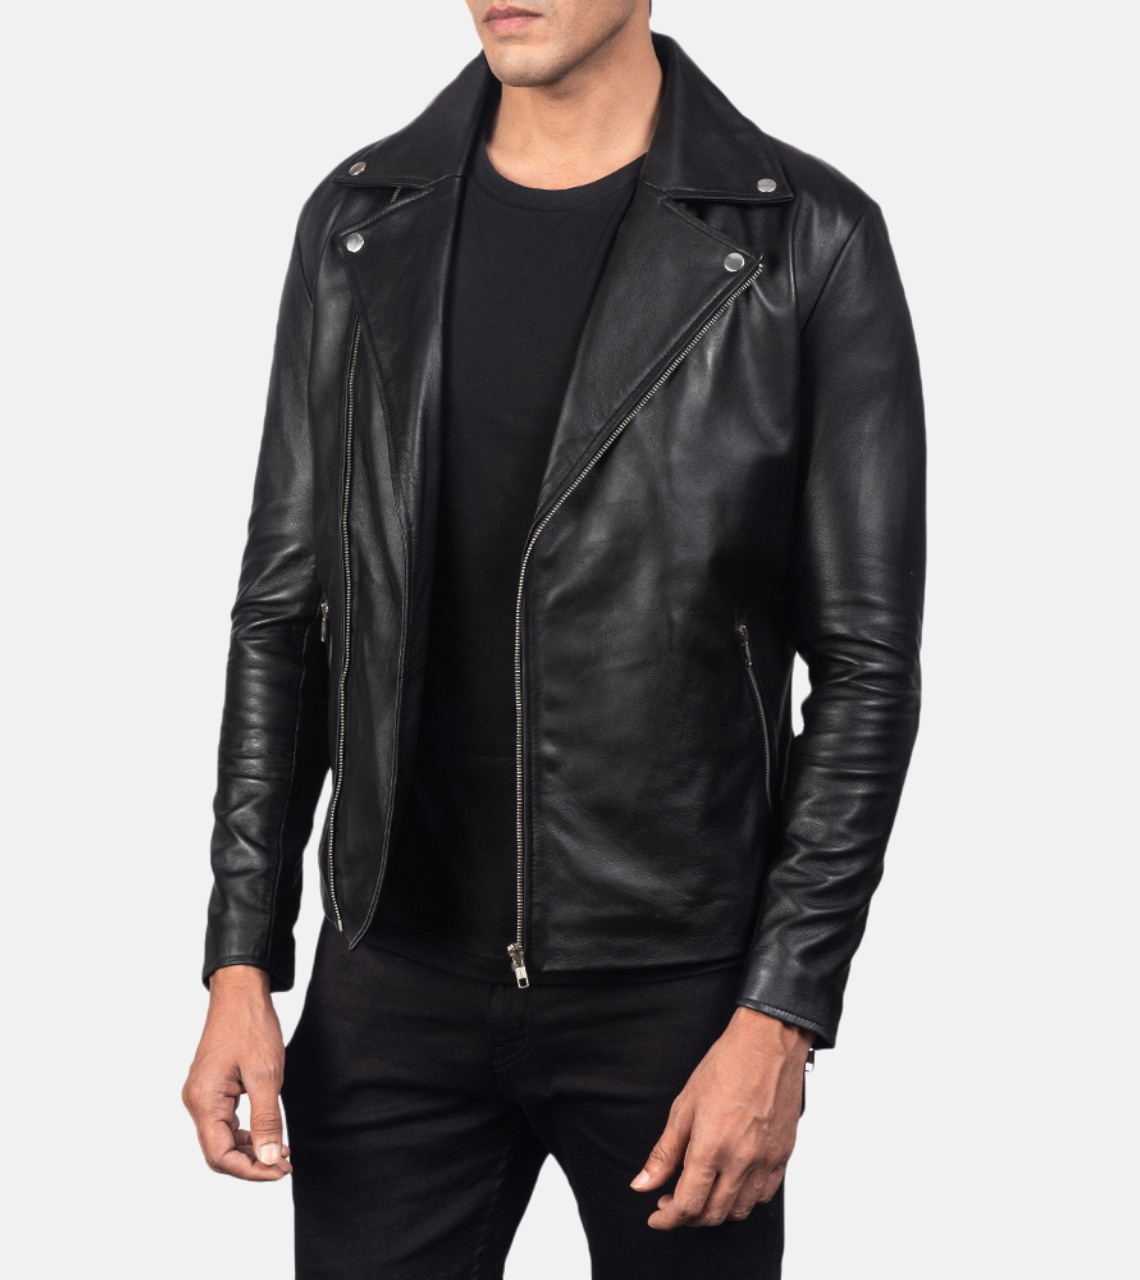  Peninsula Men's Biker Leather Jacket 